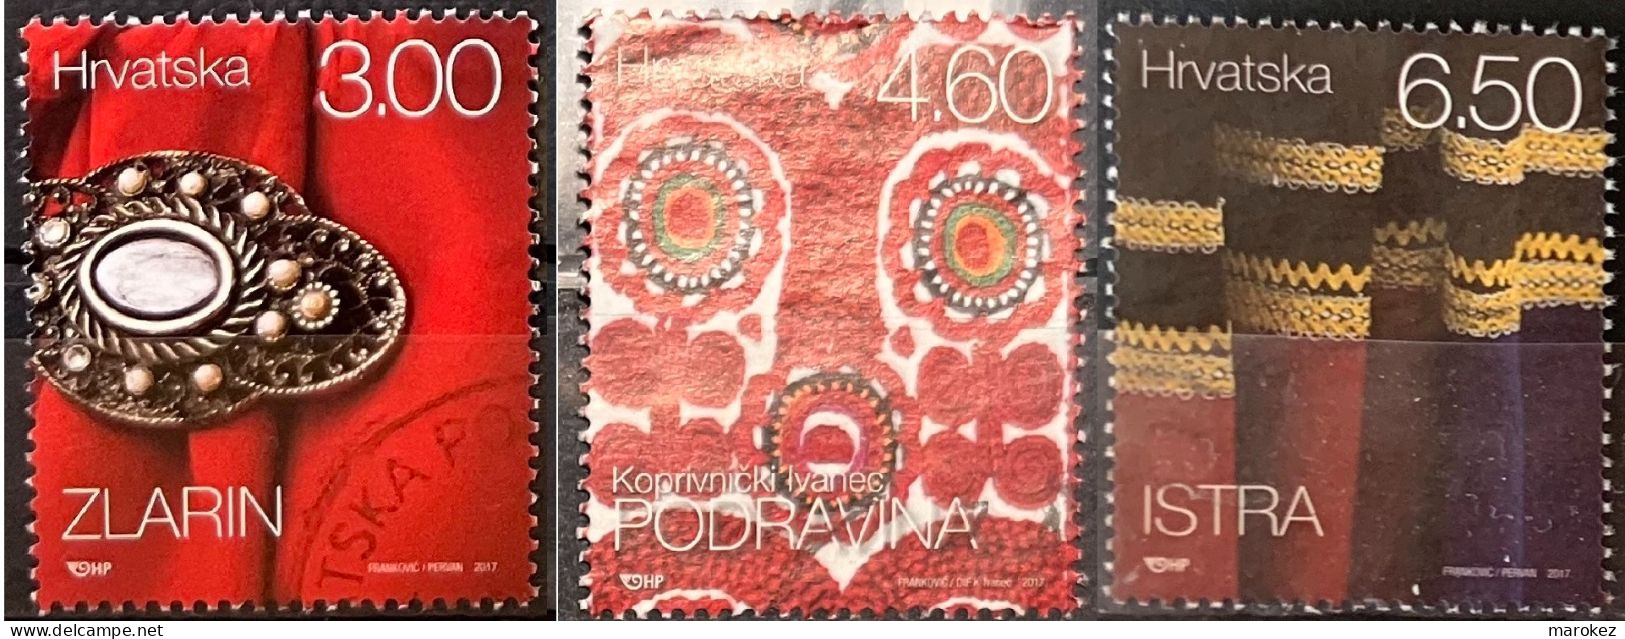 CROATIA 2017 Ethnographical Heritage - Fabric; Zlarin, Istra & Podravina Postally Used Stamps MICHEL # 1268,1269,1271 - Kroatien